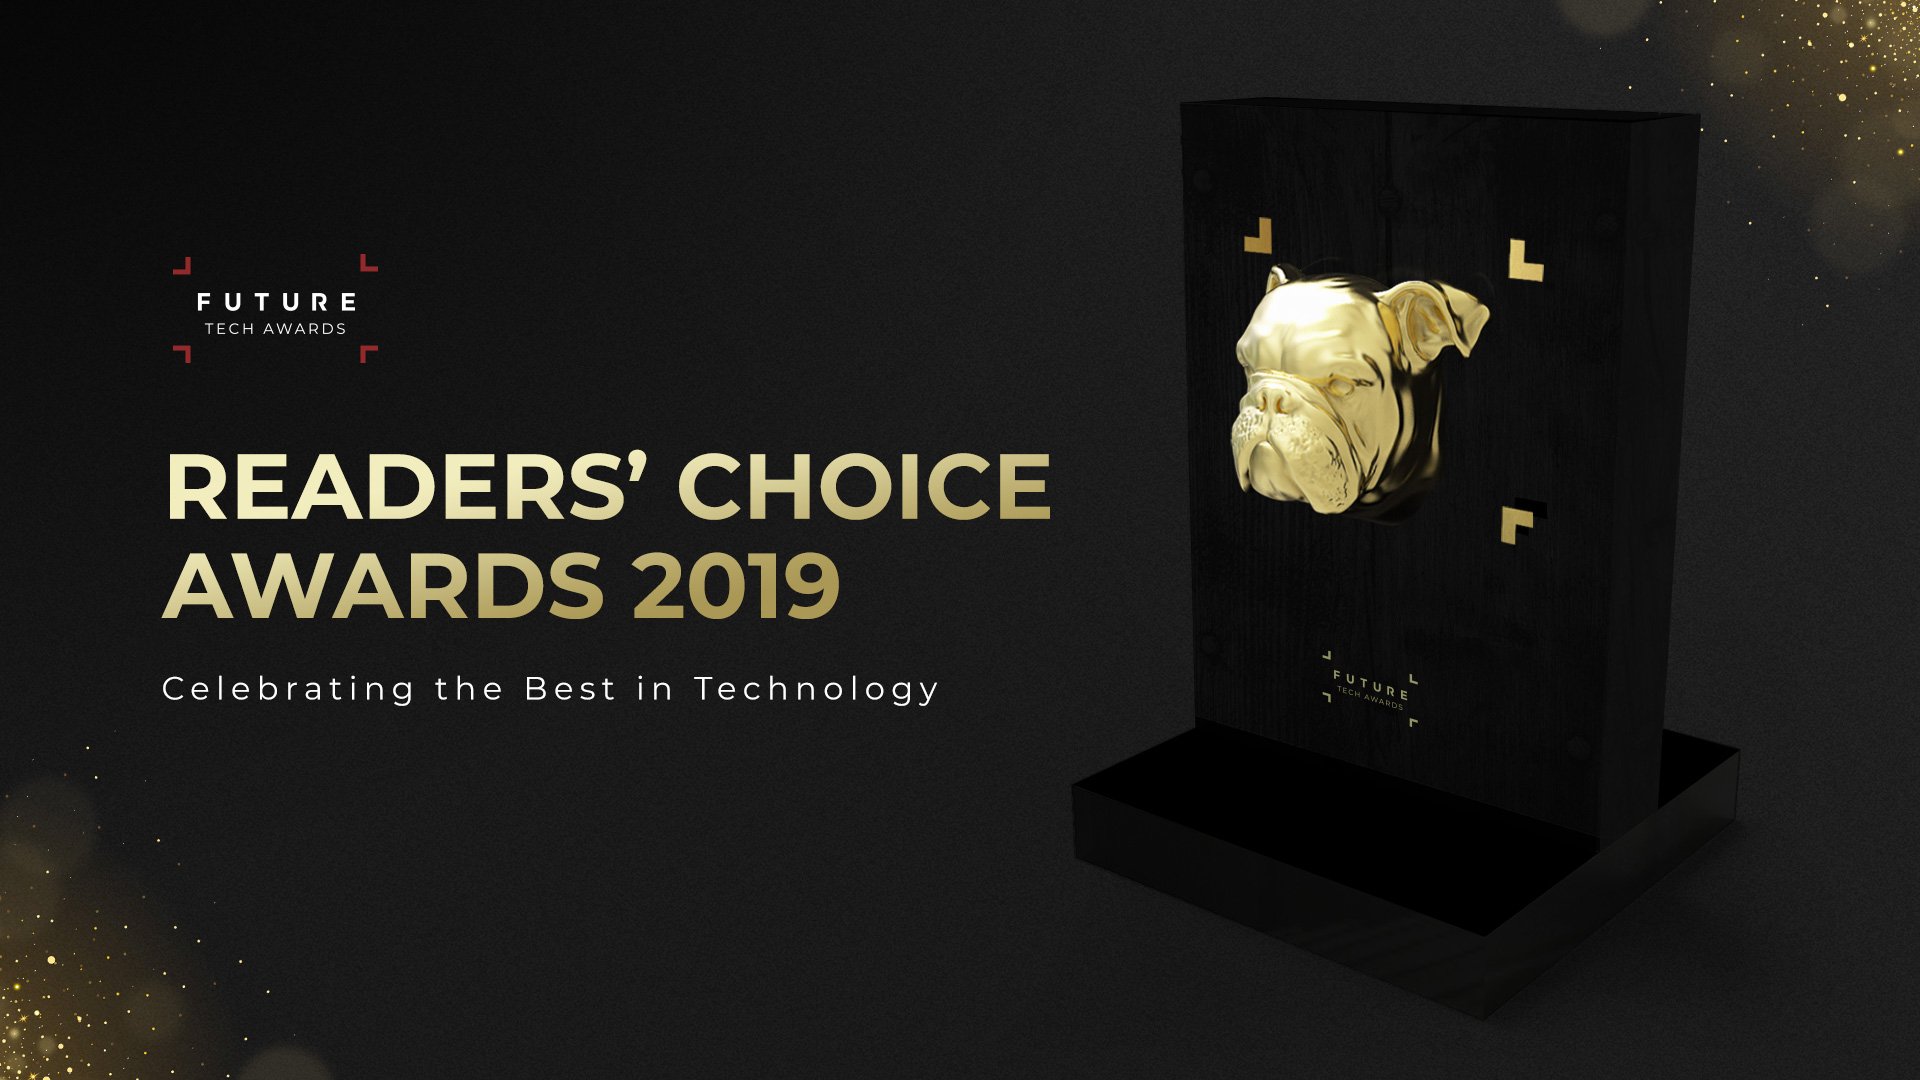 future-tech-awards-readers-choice-banner-968t.jpg